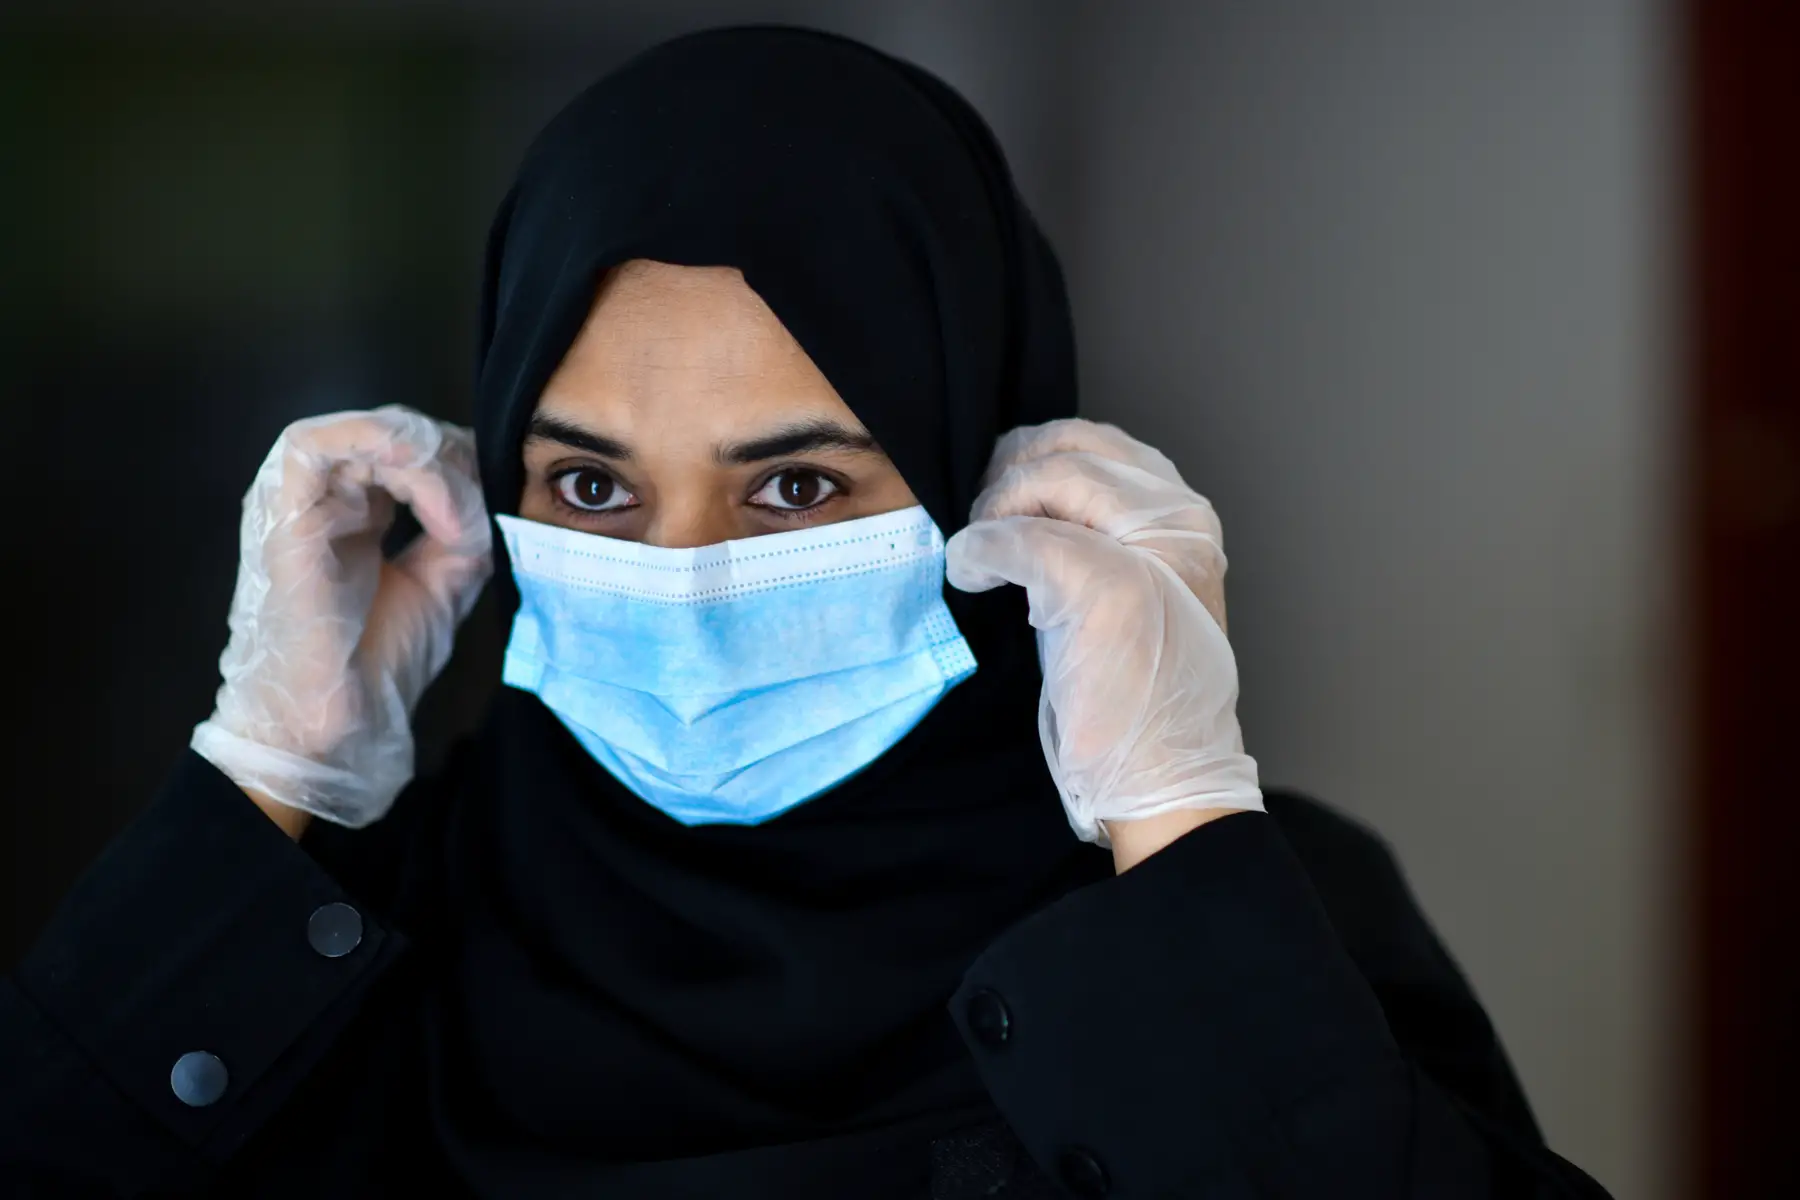 an Arab woman putting on a face mask during the coronavirus pandemic in Saudi Arabia